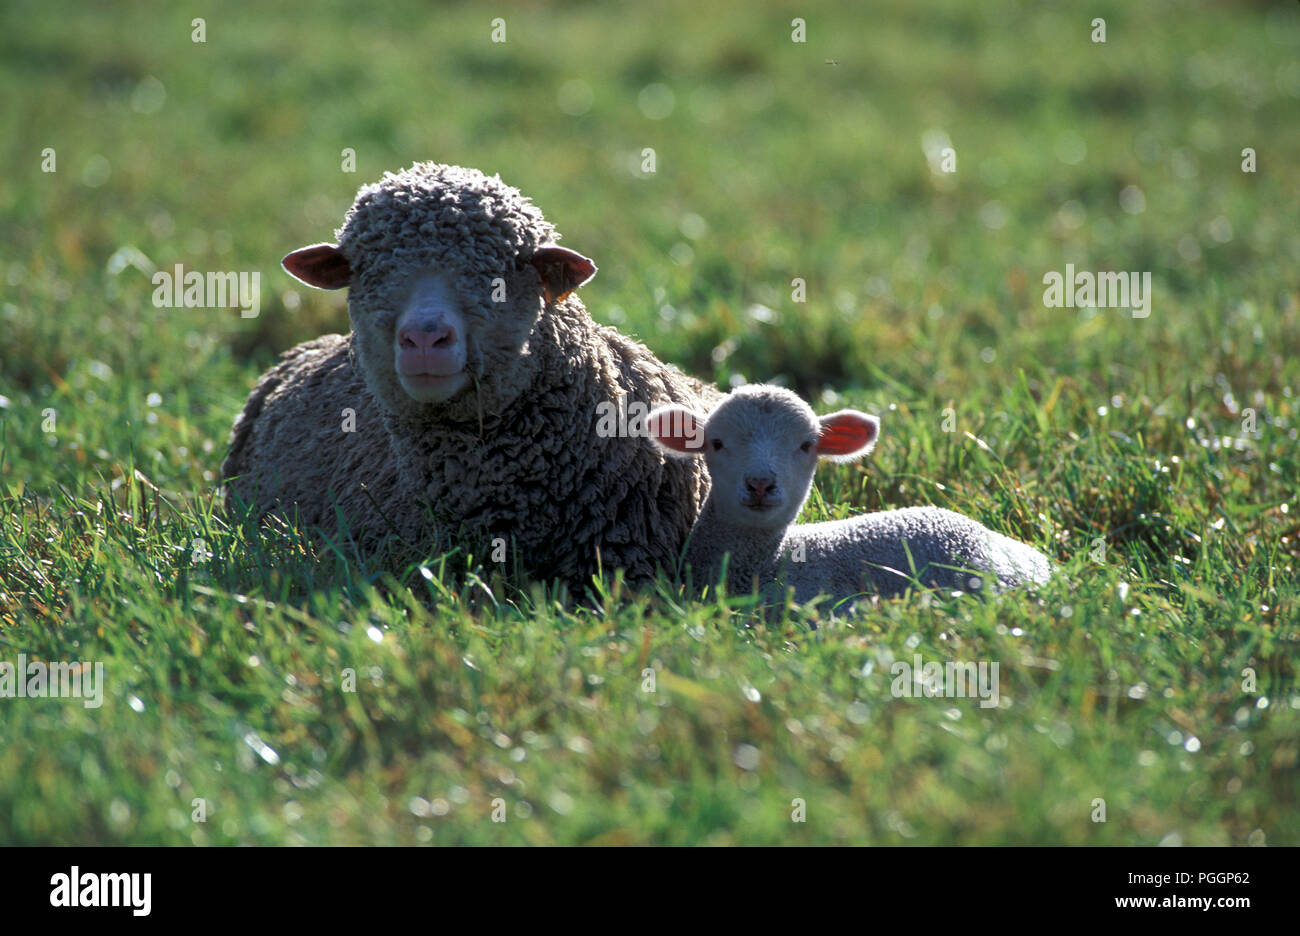 Sheep and lamb (Ovis aries) Brebis et agneau Stock Photo